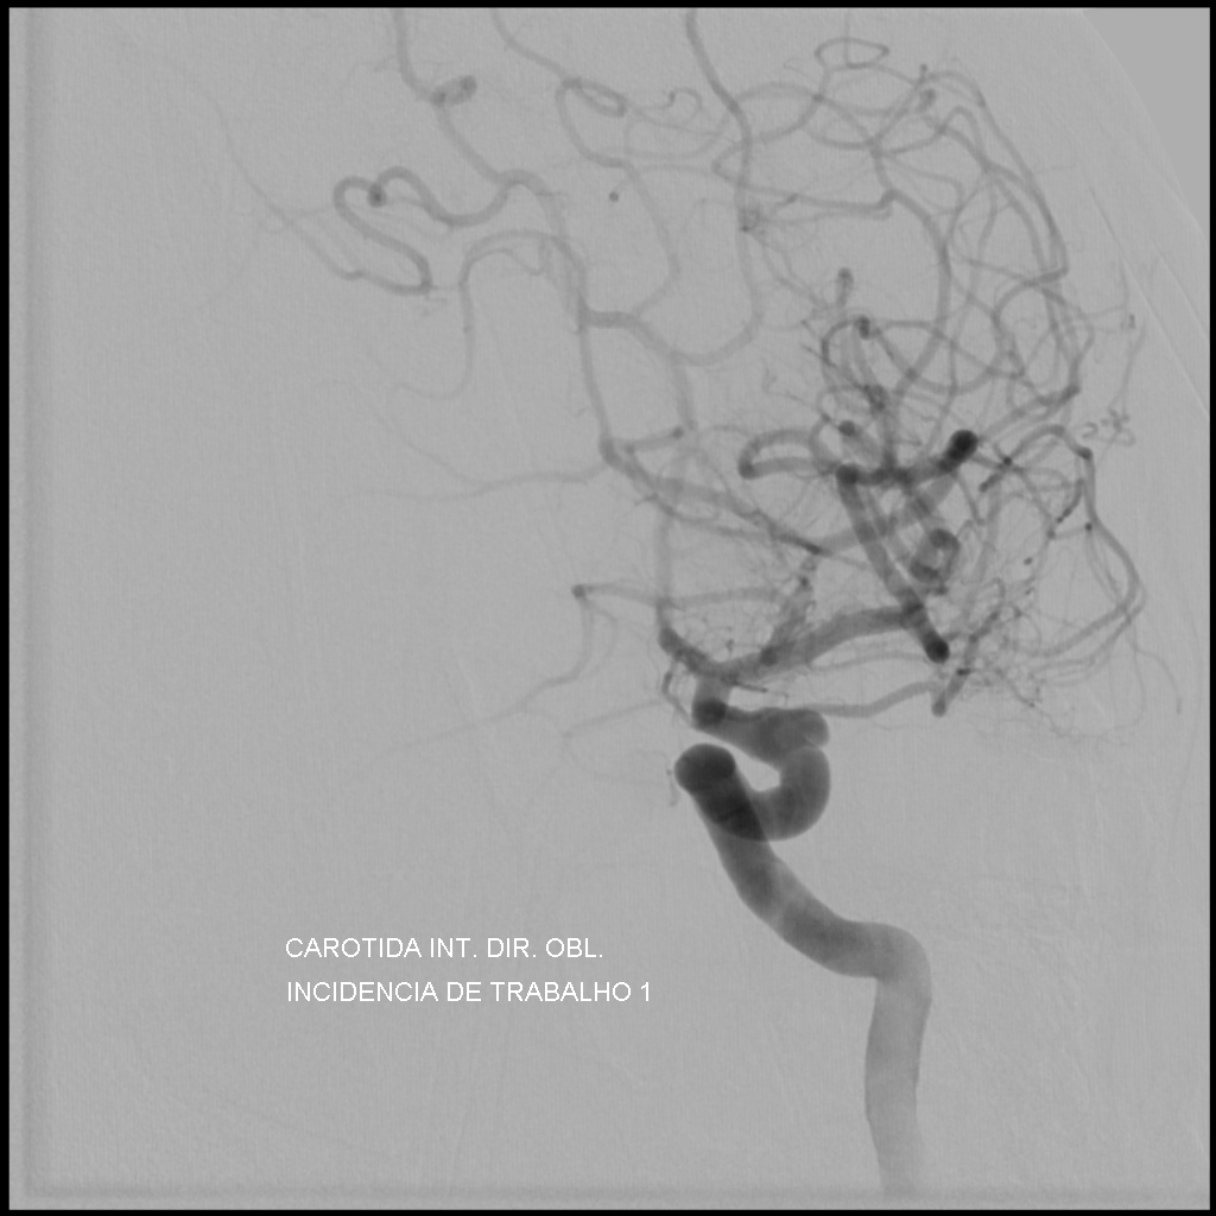 Tratamento endovascular de aneurismas de segmento oftálmico com colo desfavorável